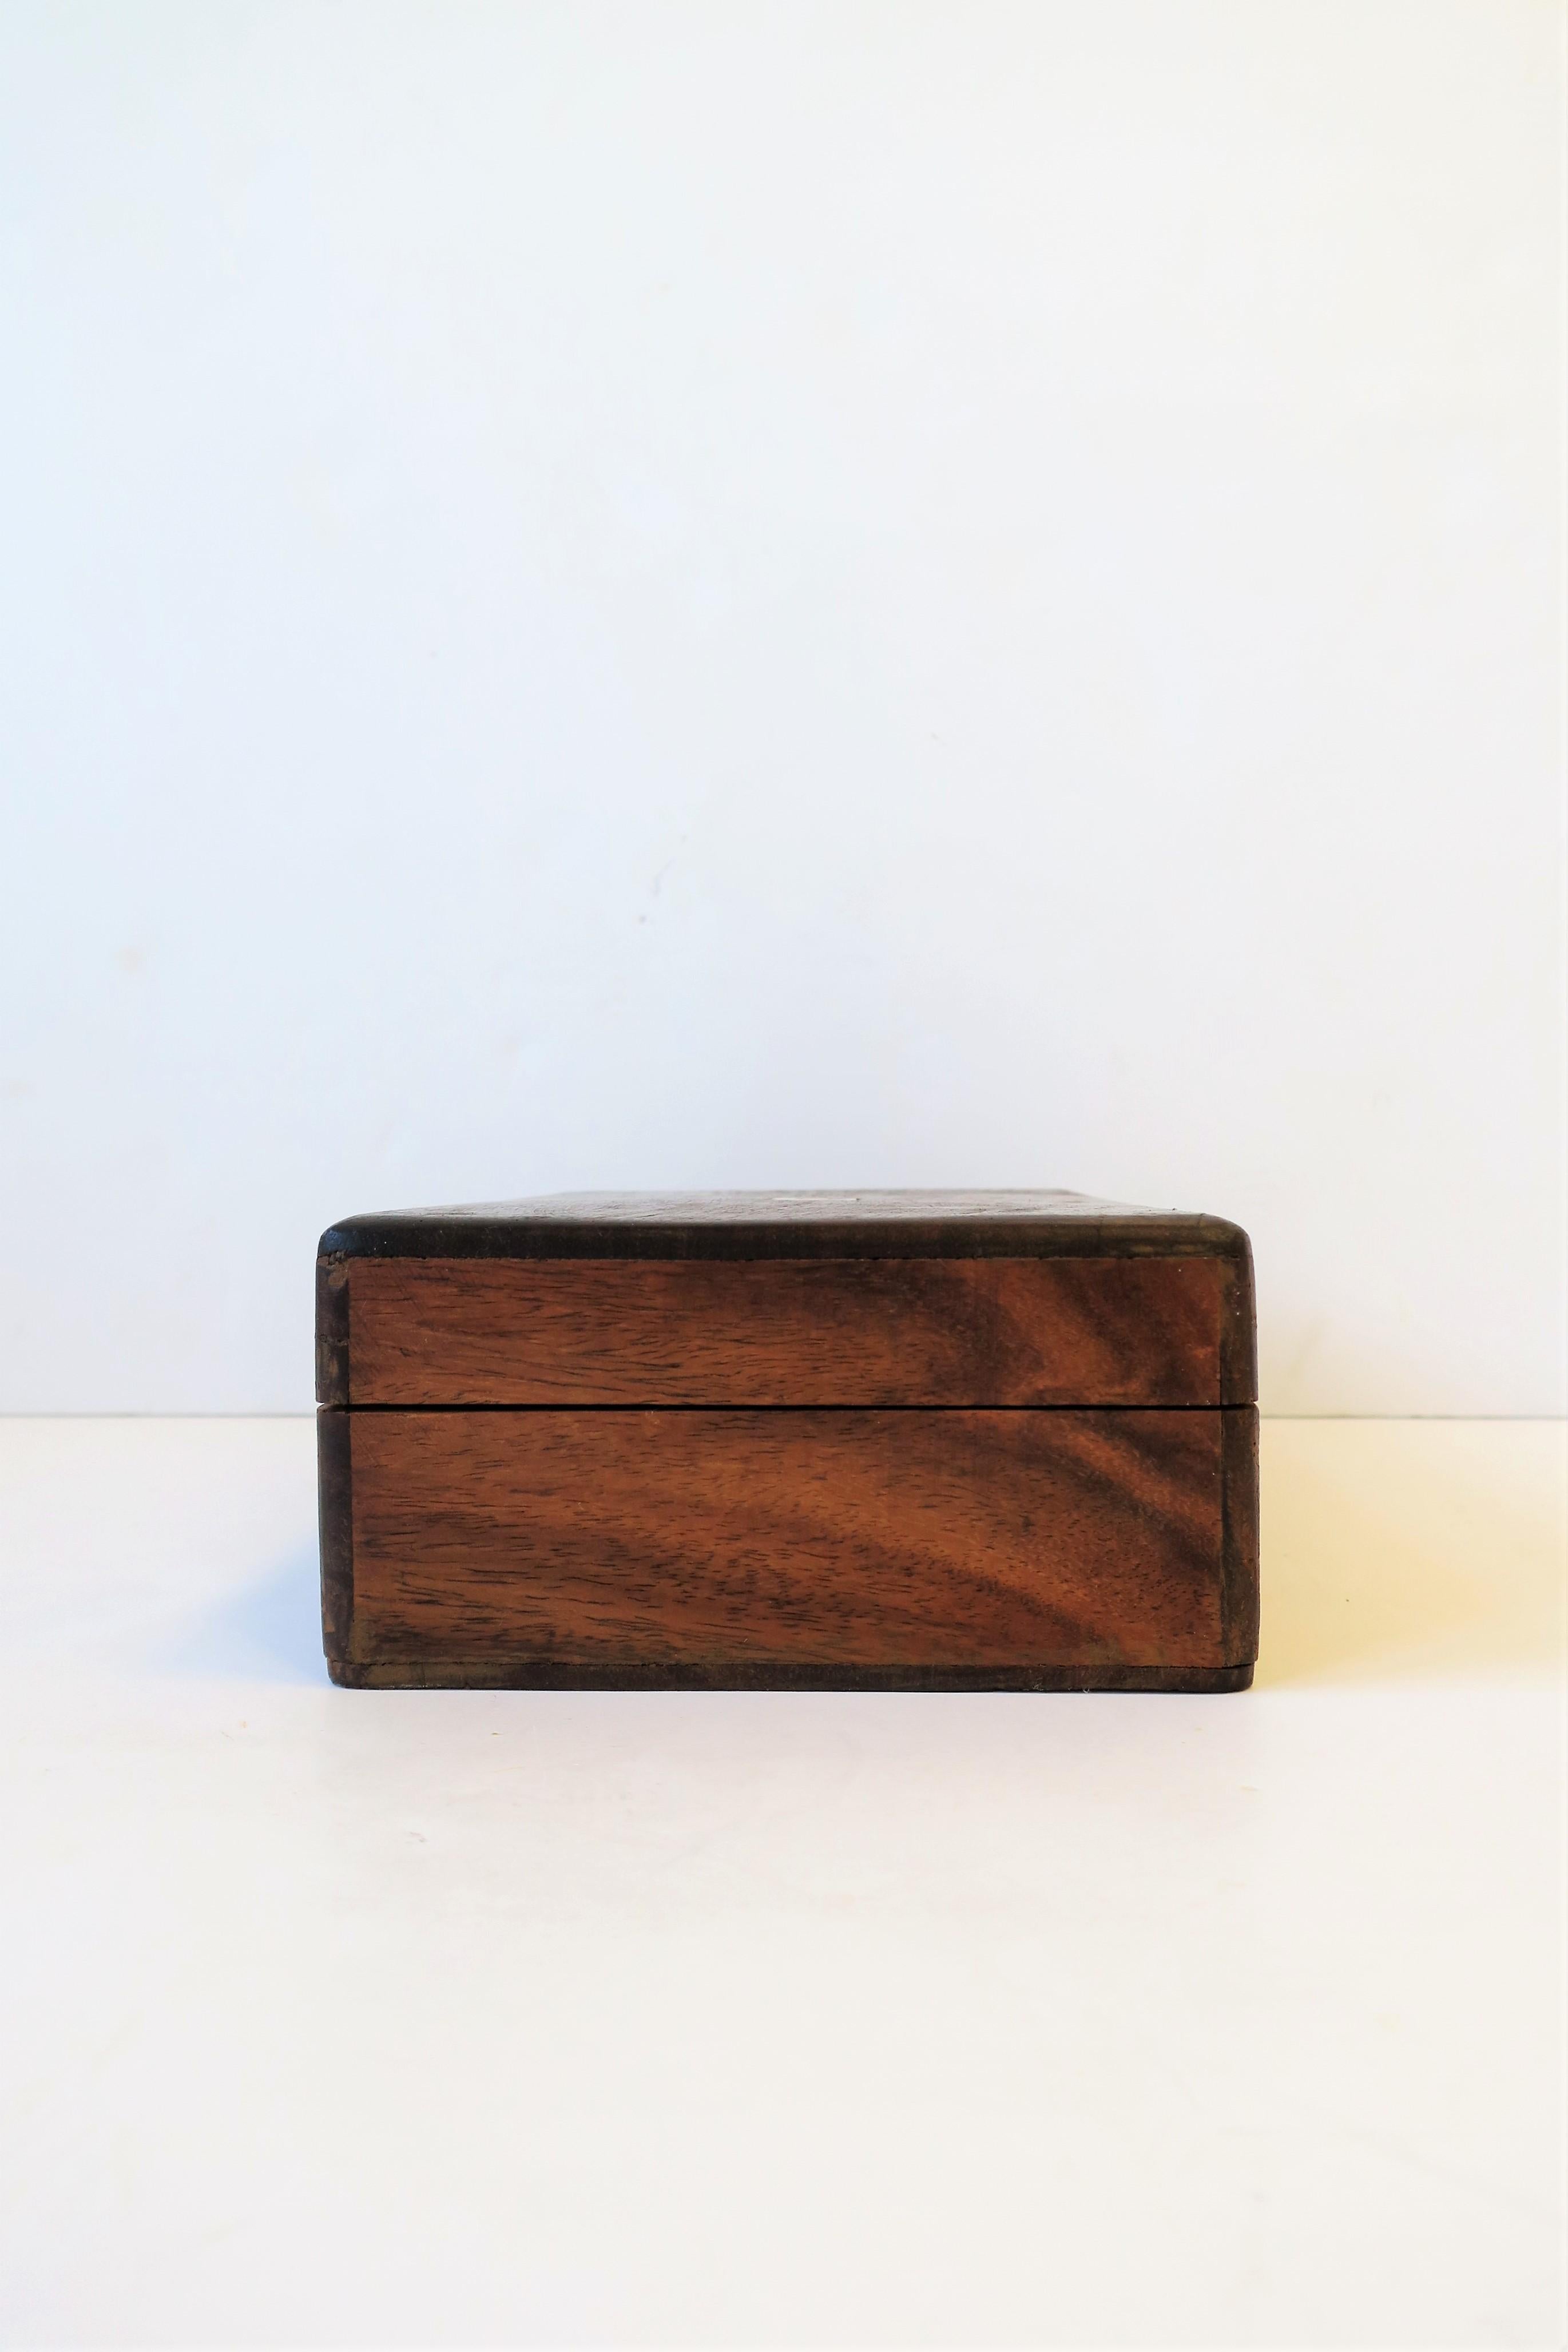 Pierre Cardin Wood Jewelry Box 2